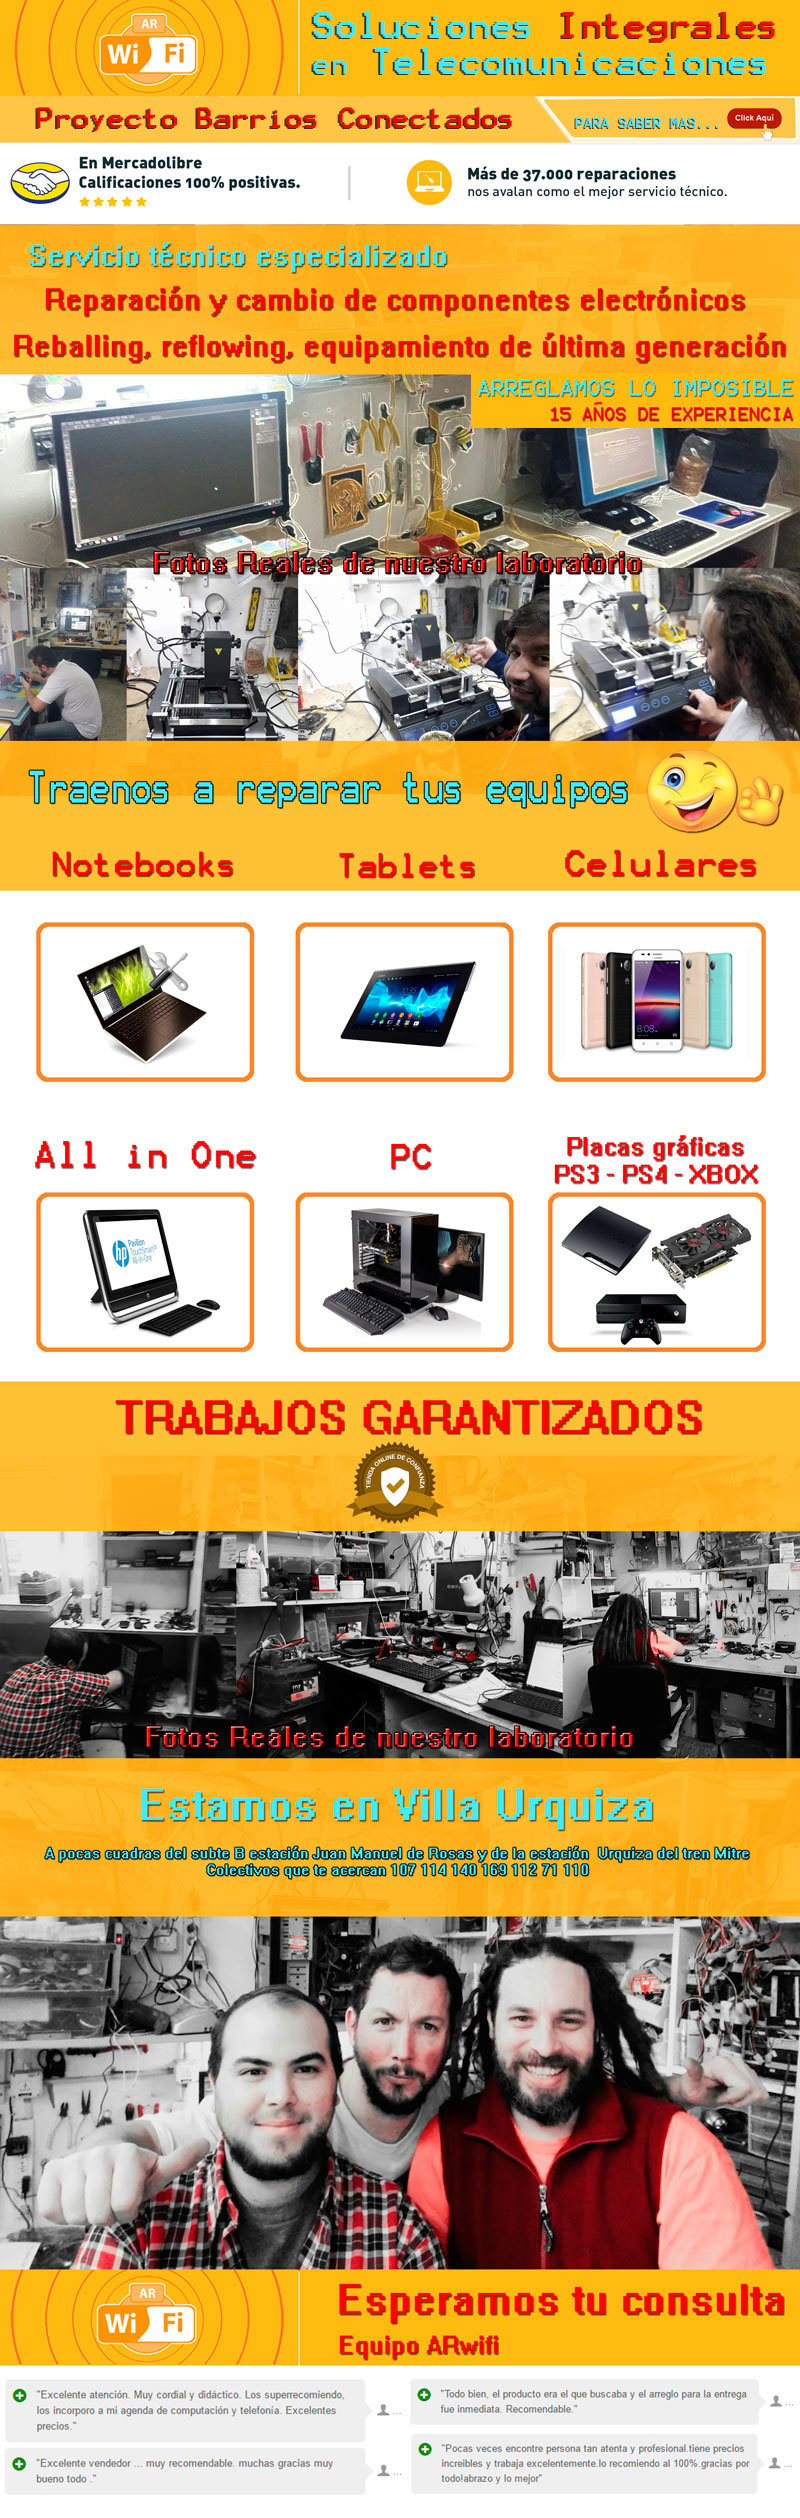 Servicio tecnico pc celulares tablets impresoras